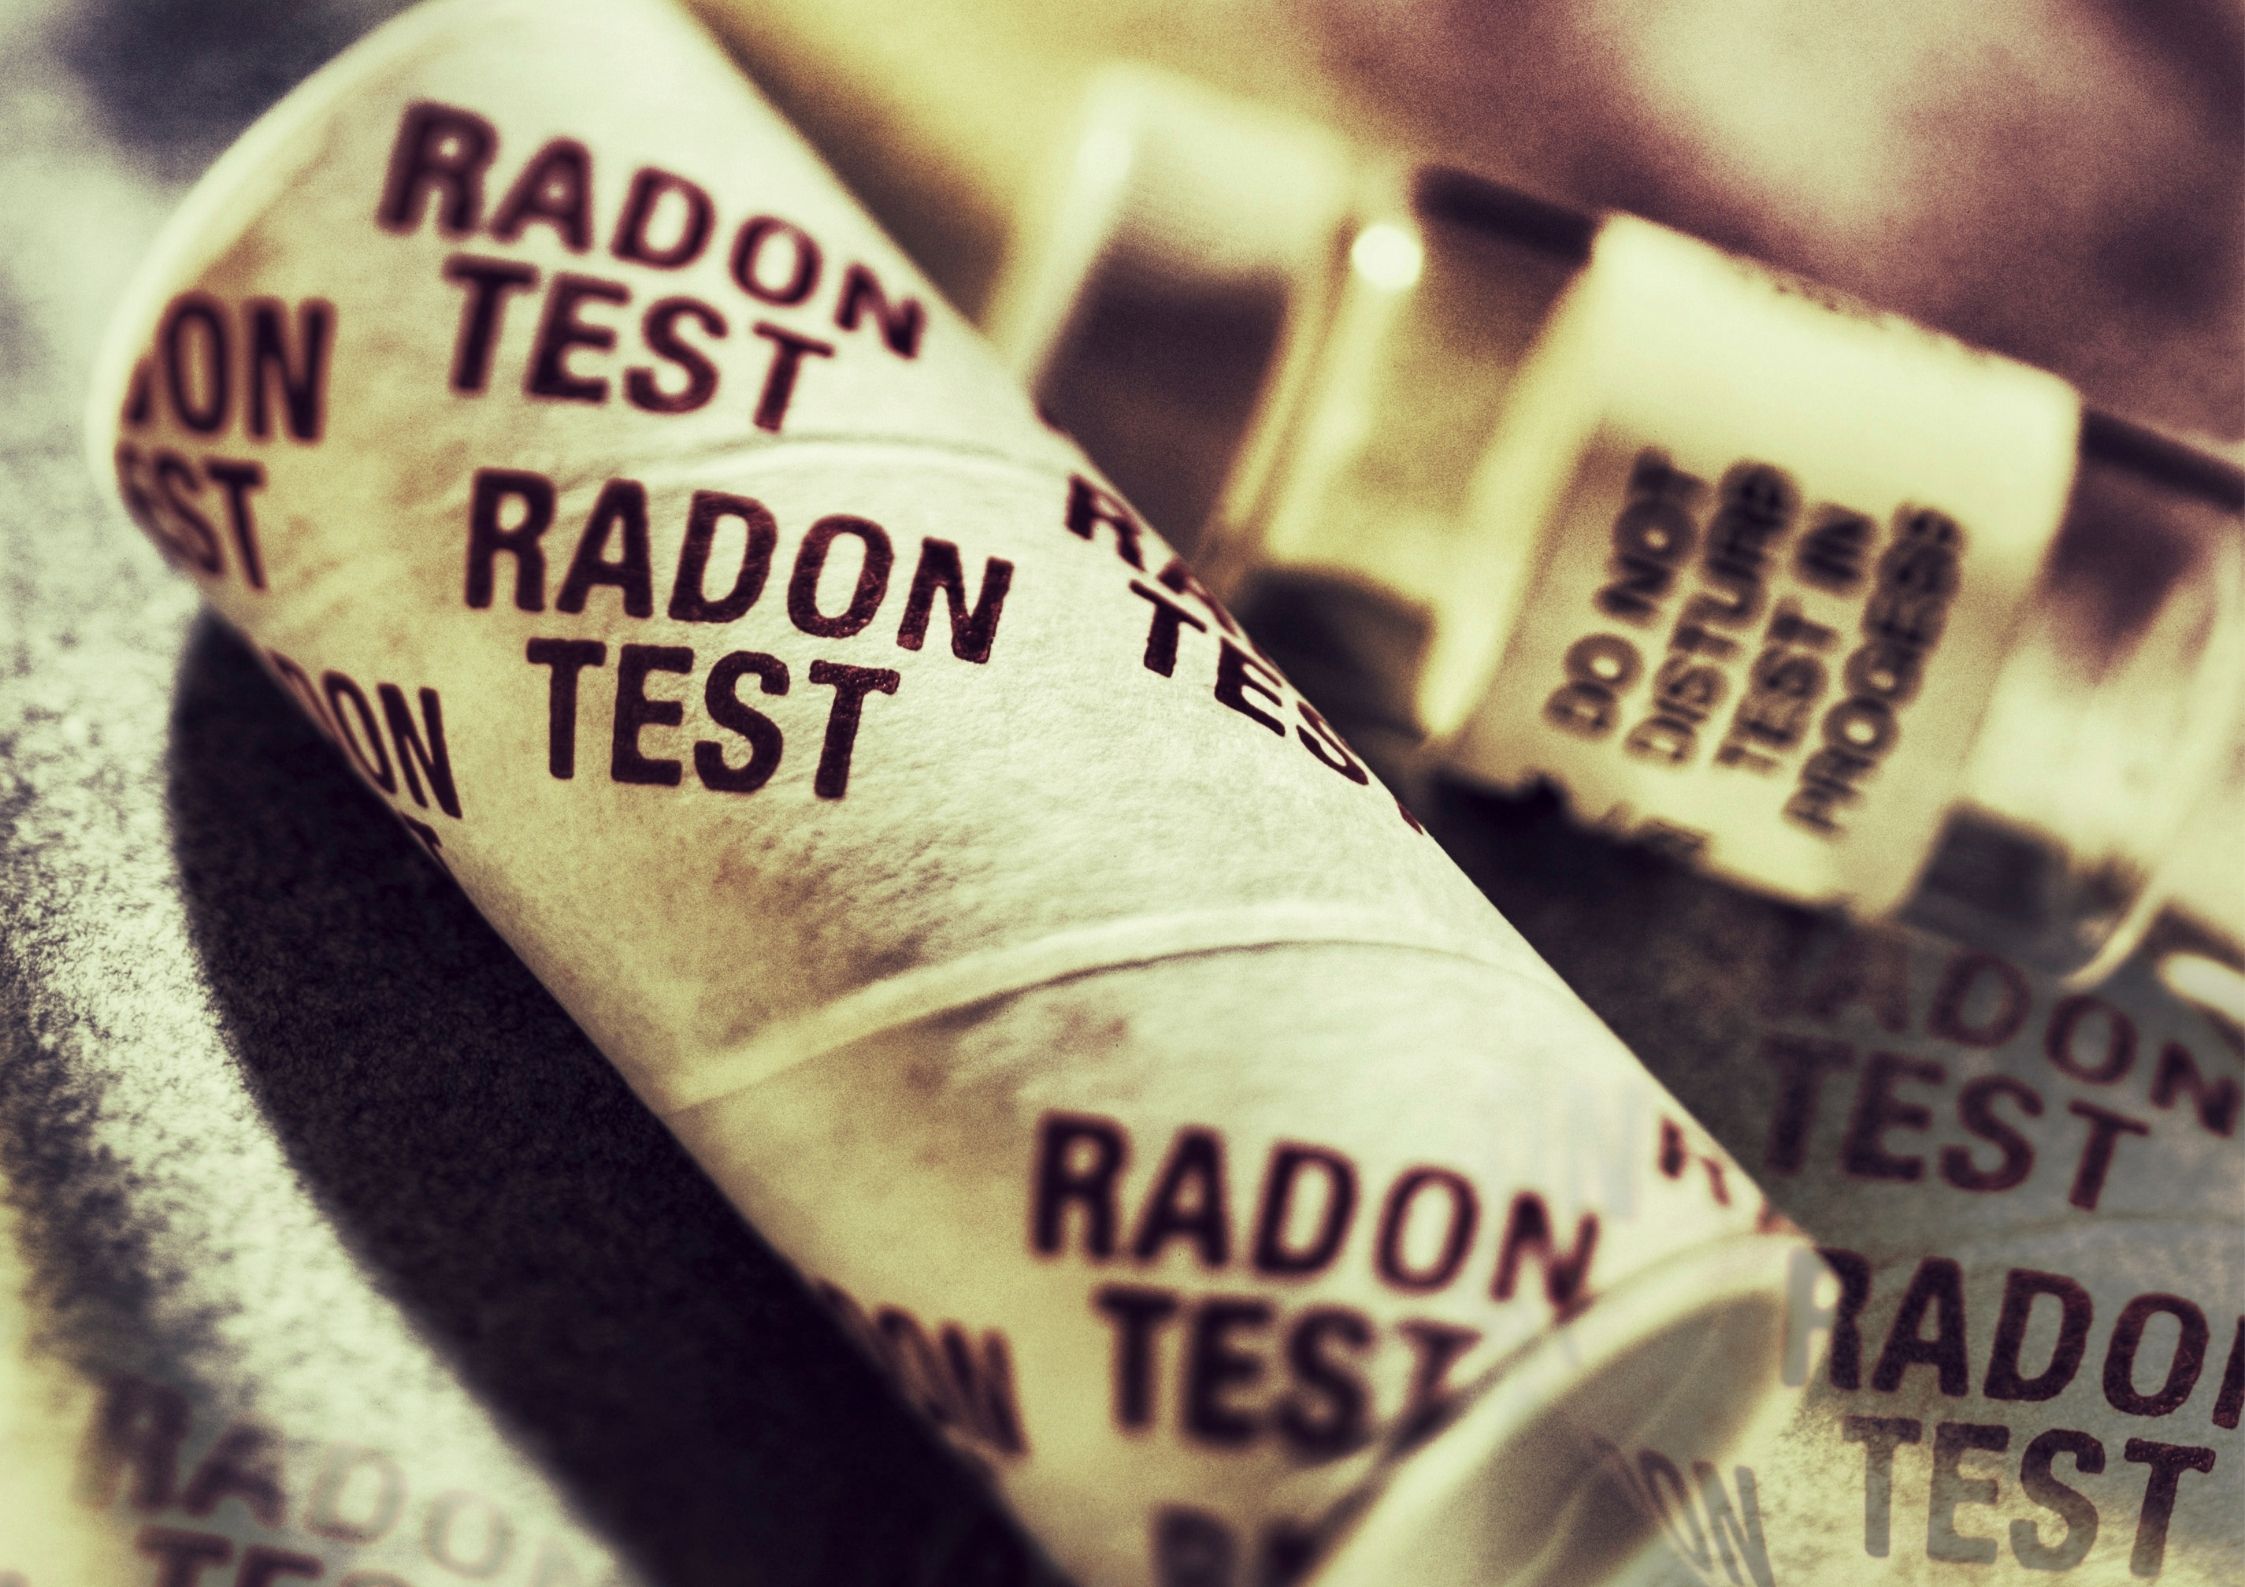 Radon test sporfilm